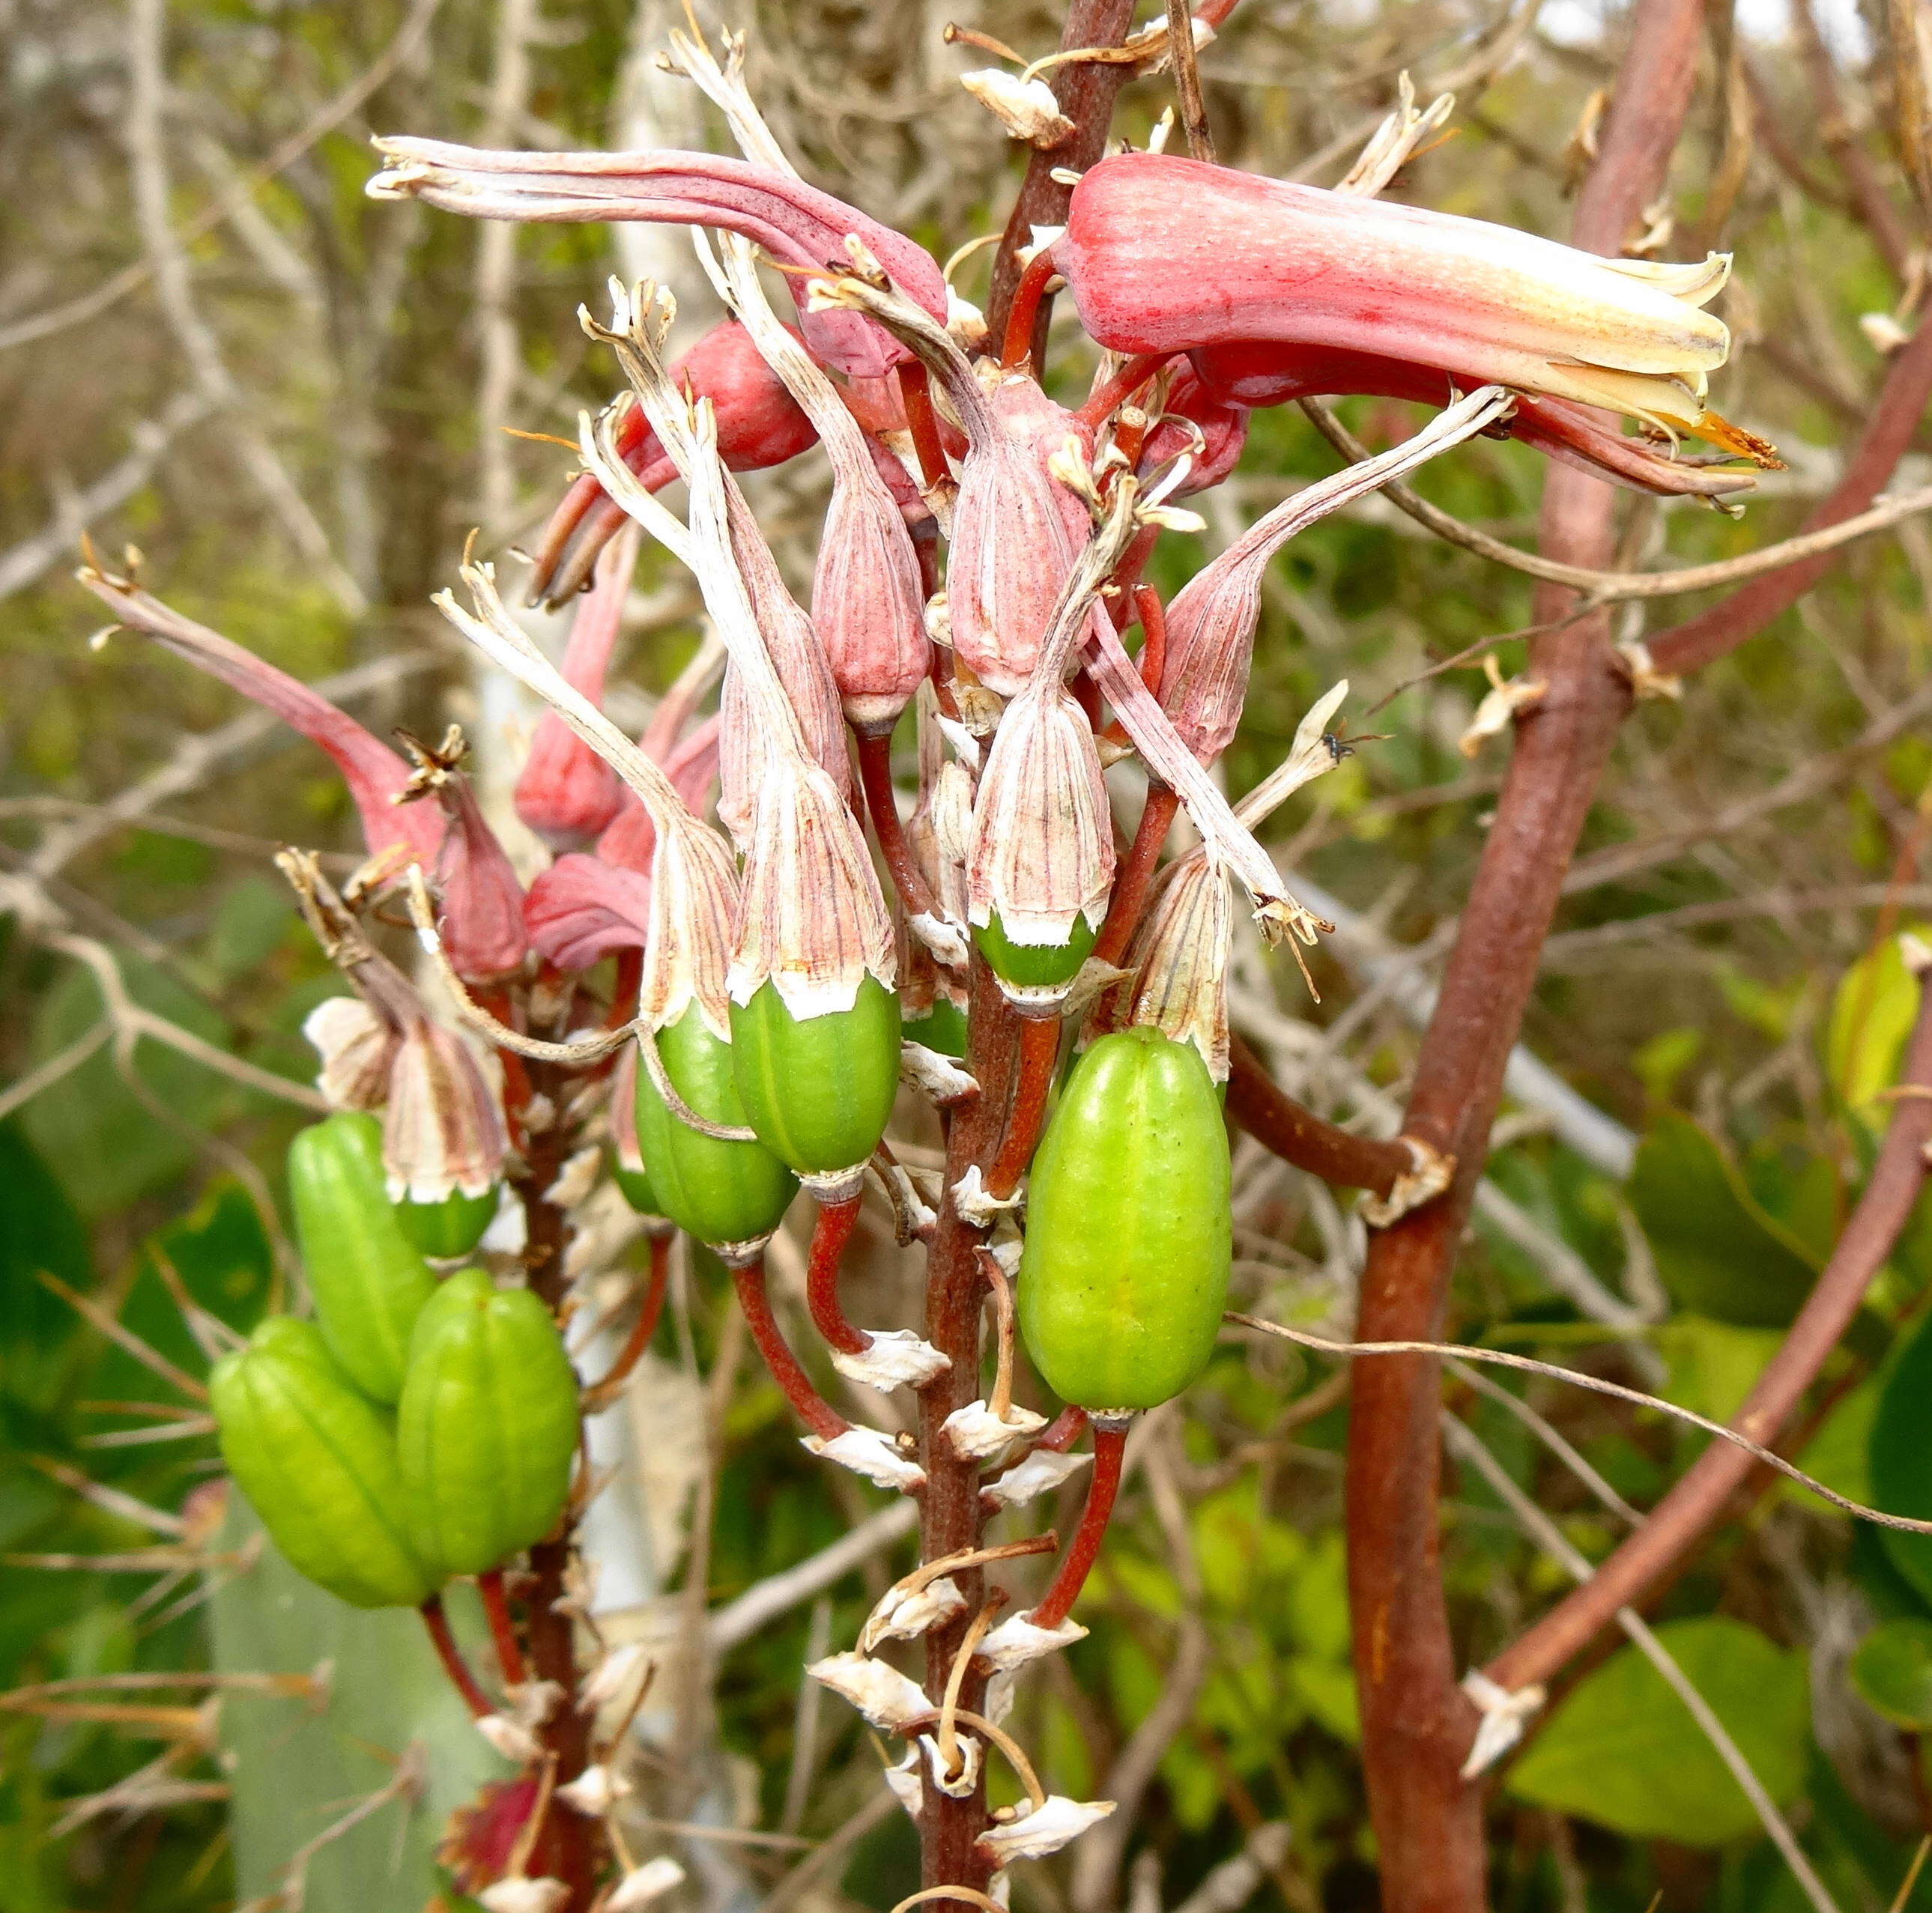 Image of Aloe mossurilensis Ellert